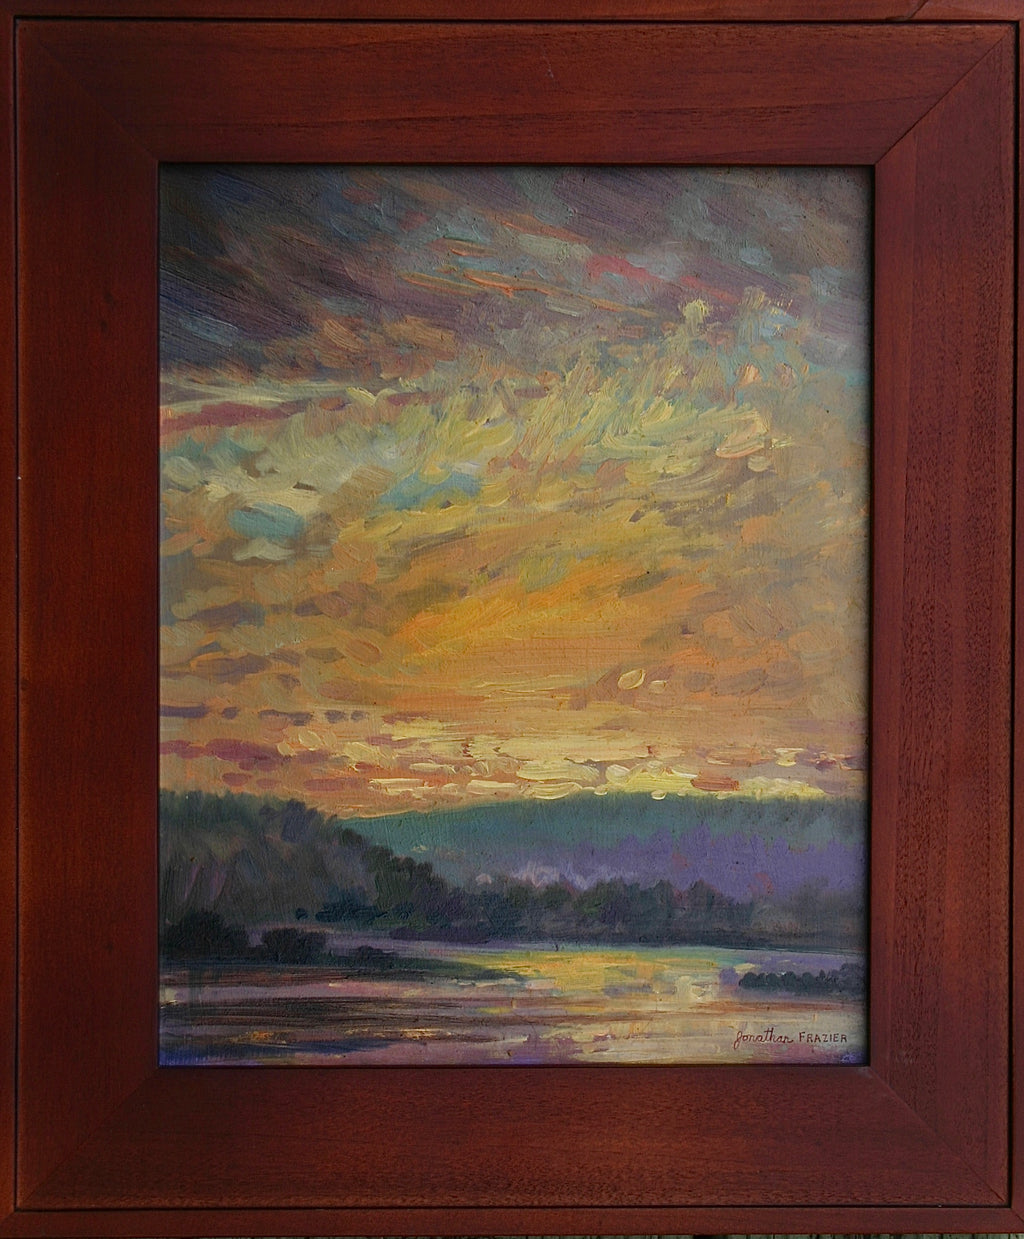 Susquehanna Afterglow by Jonathan Frazier